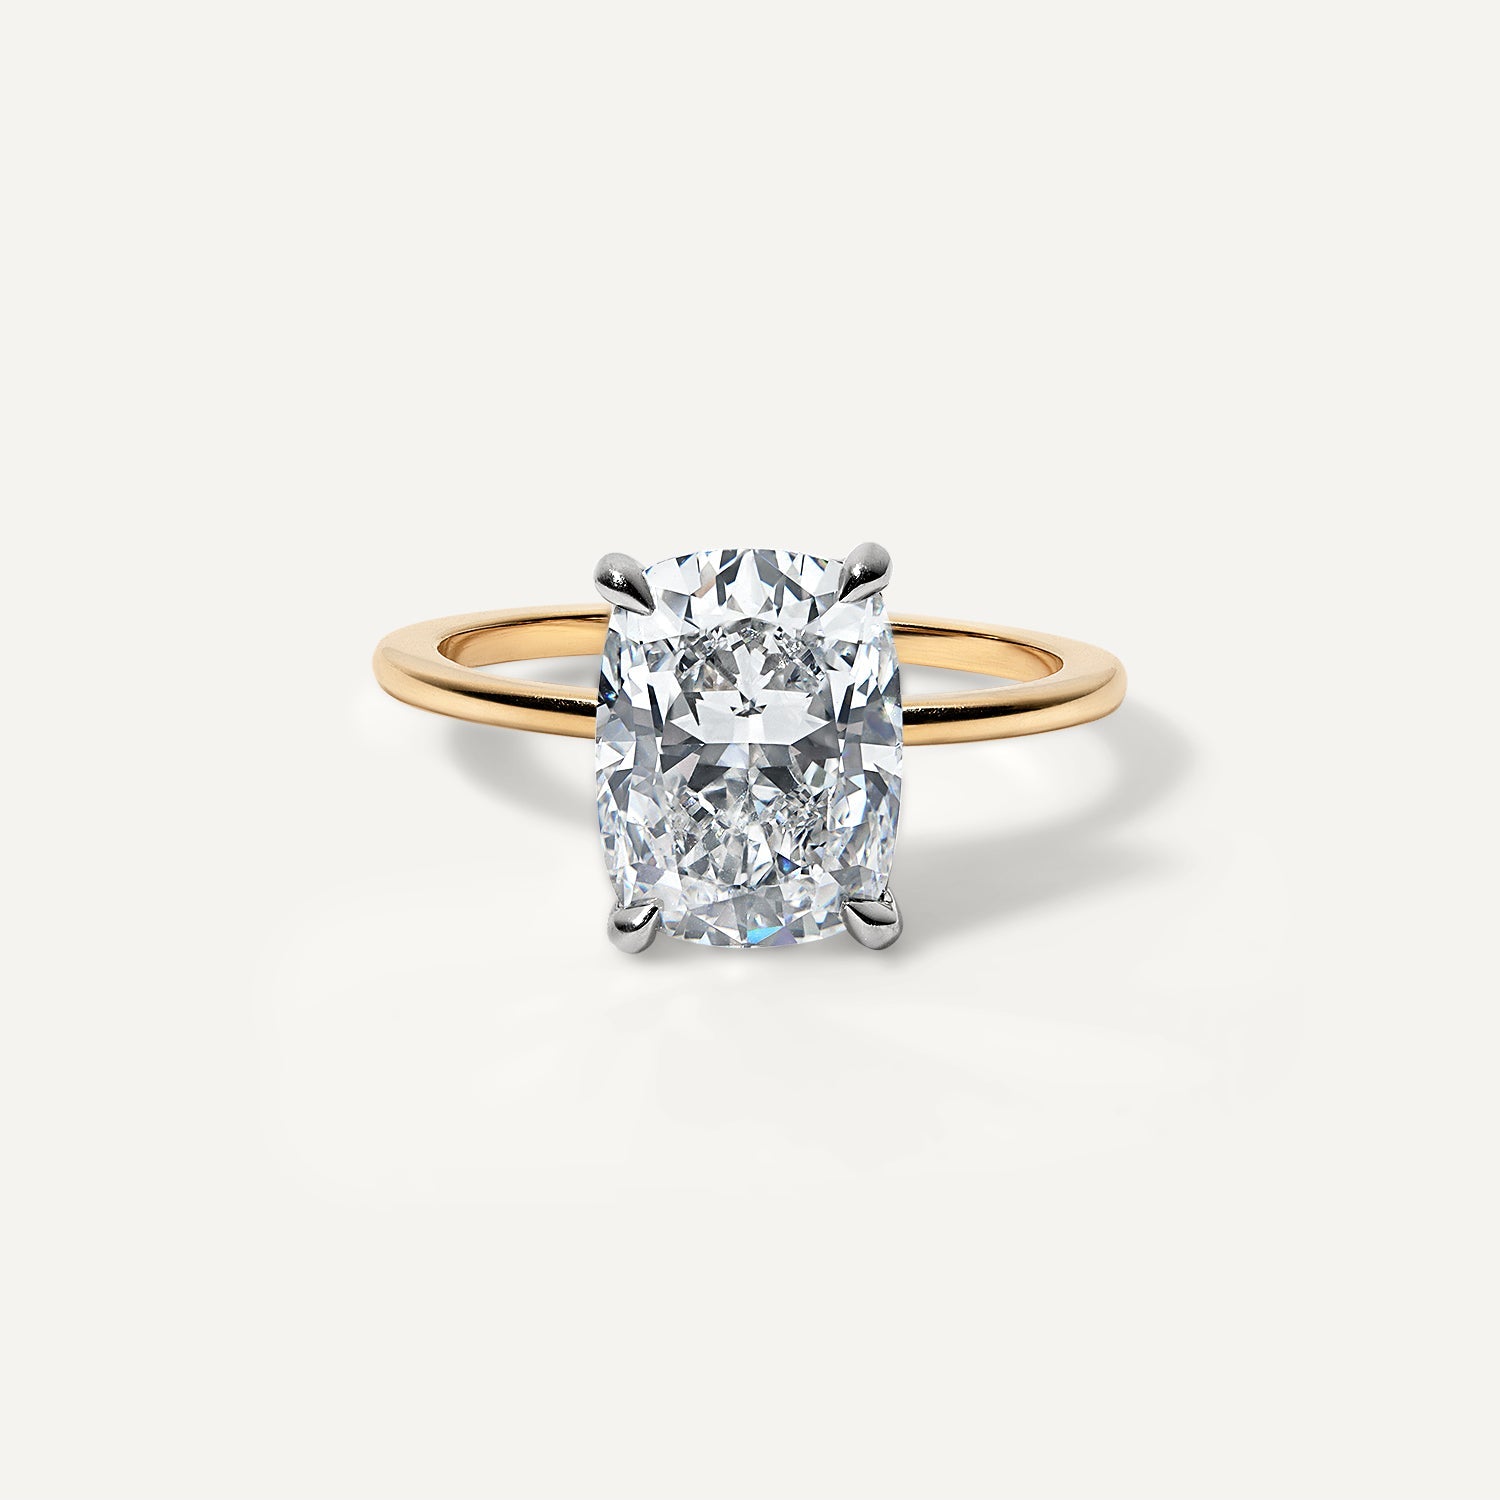 Cushion lab diamond engagement ring.